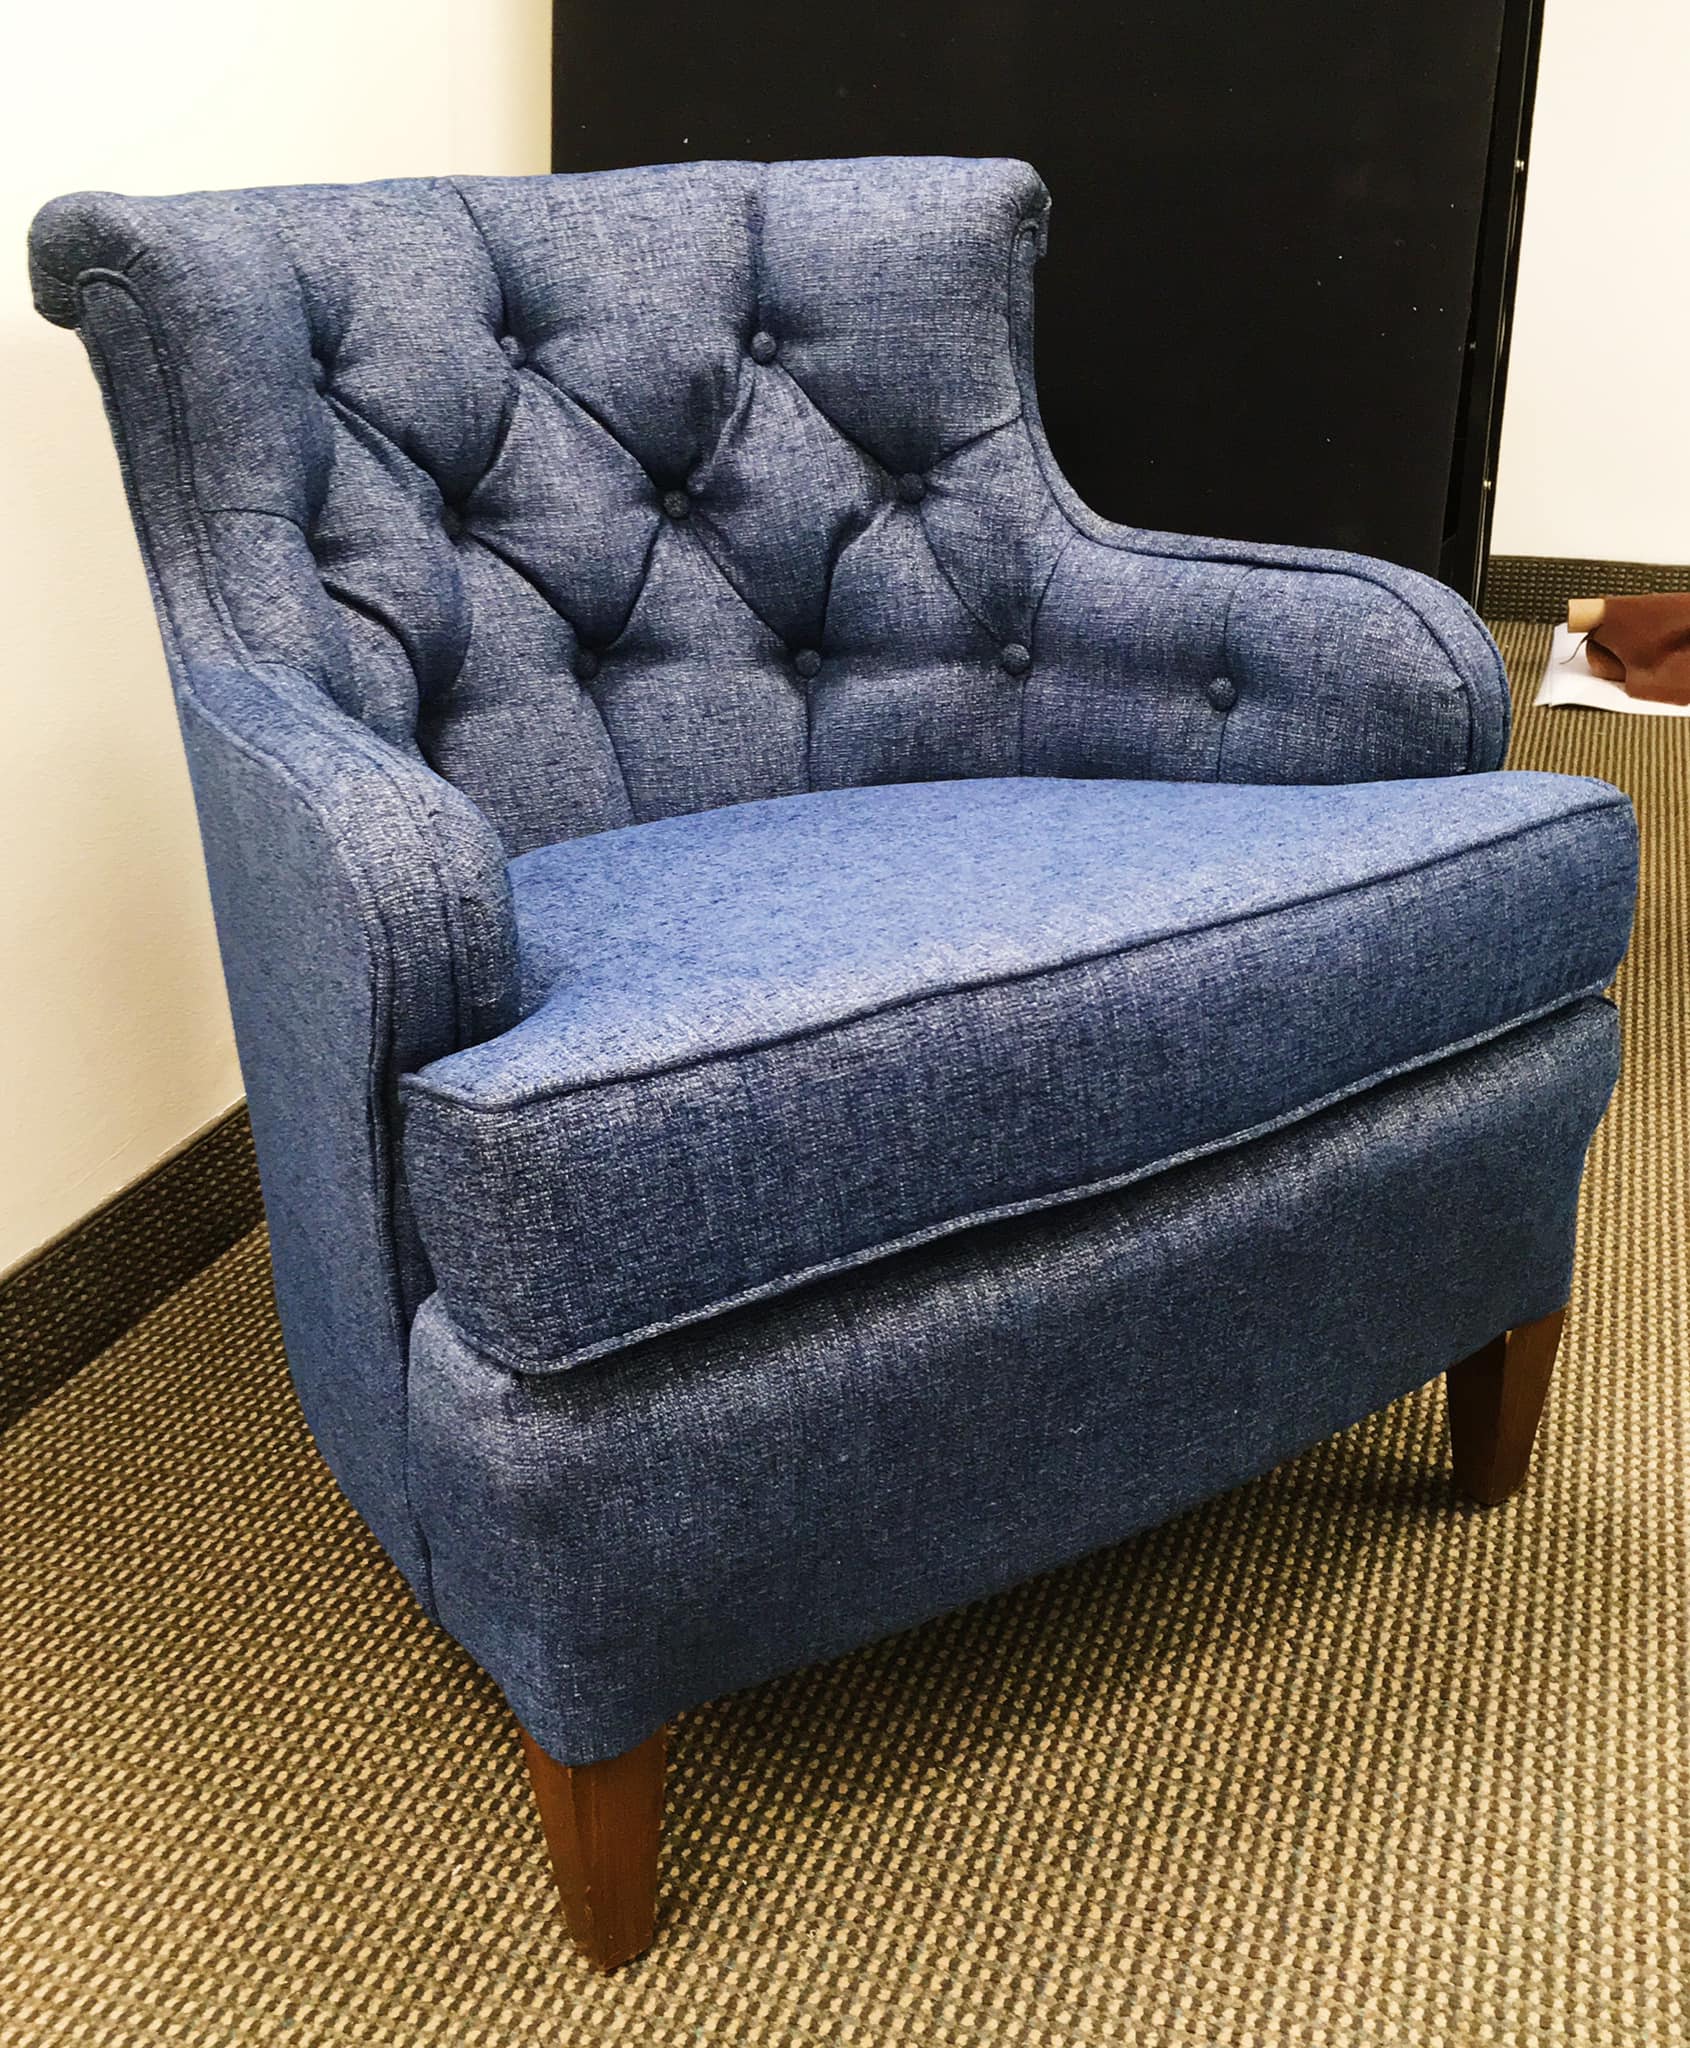 Restored Navy Armchair - Interior Furniture Upholstery